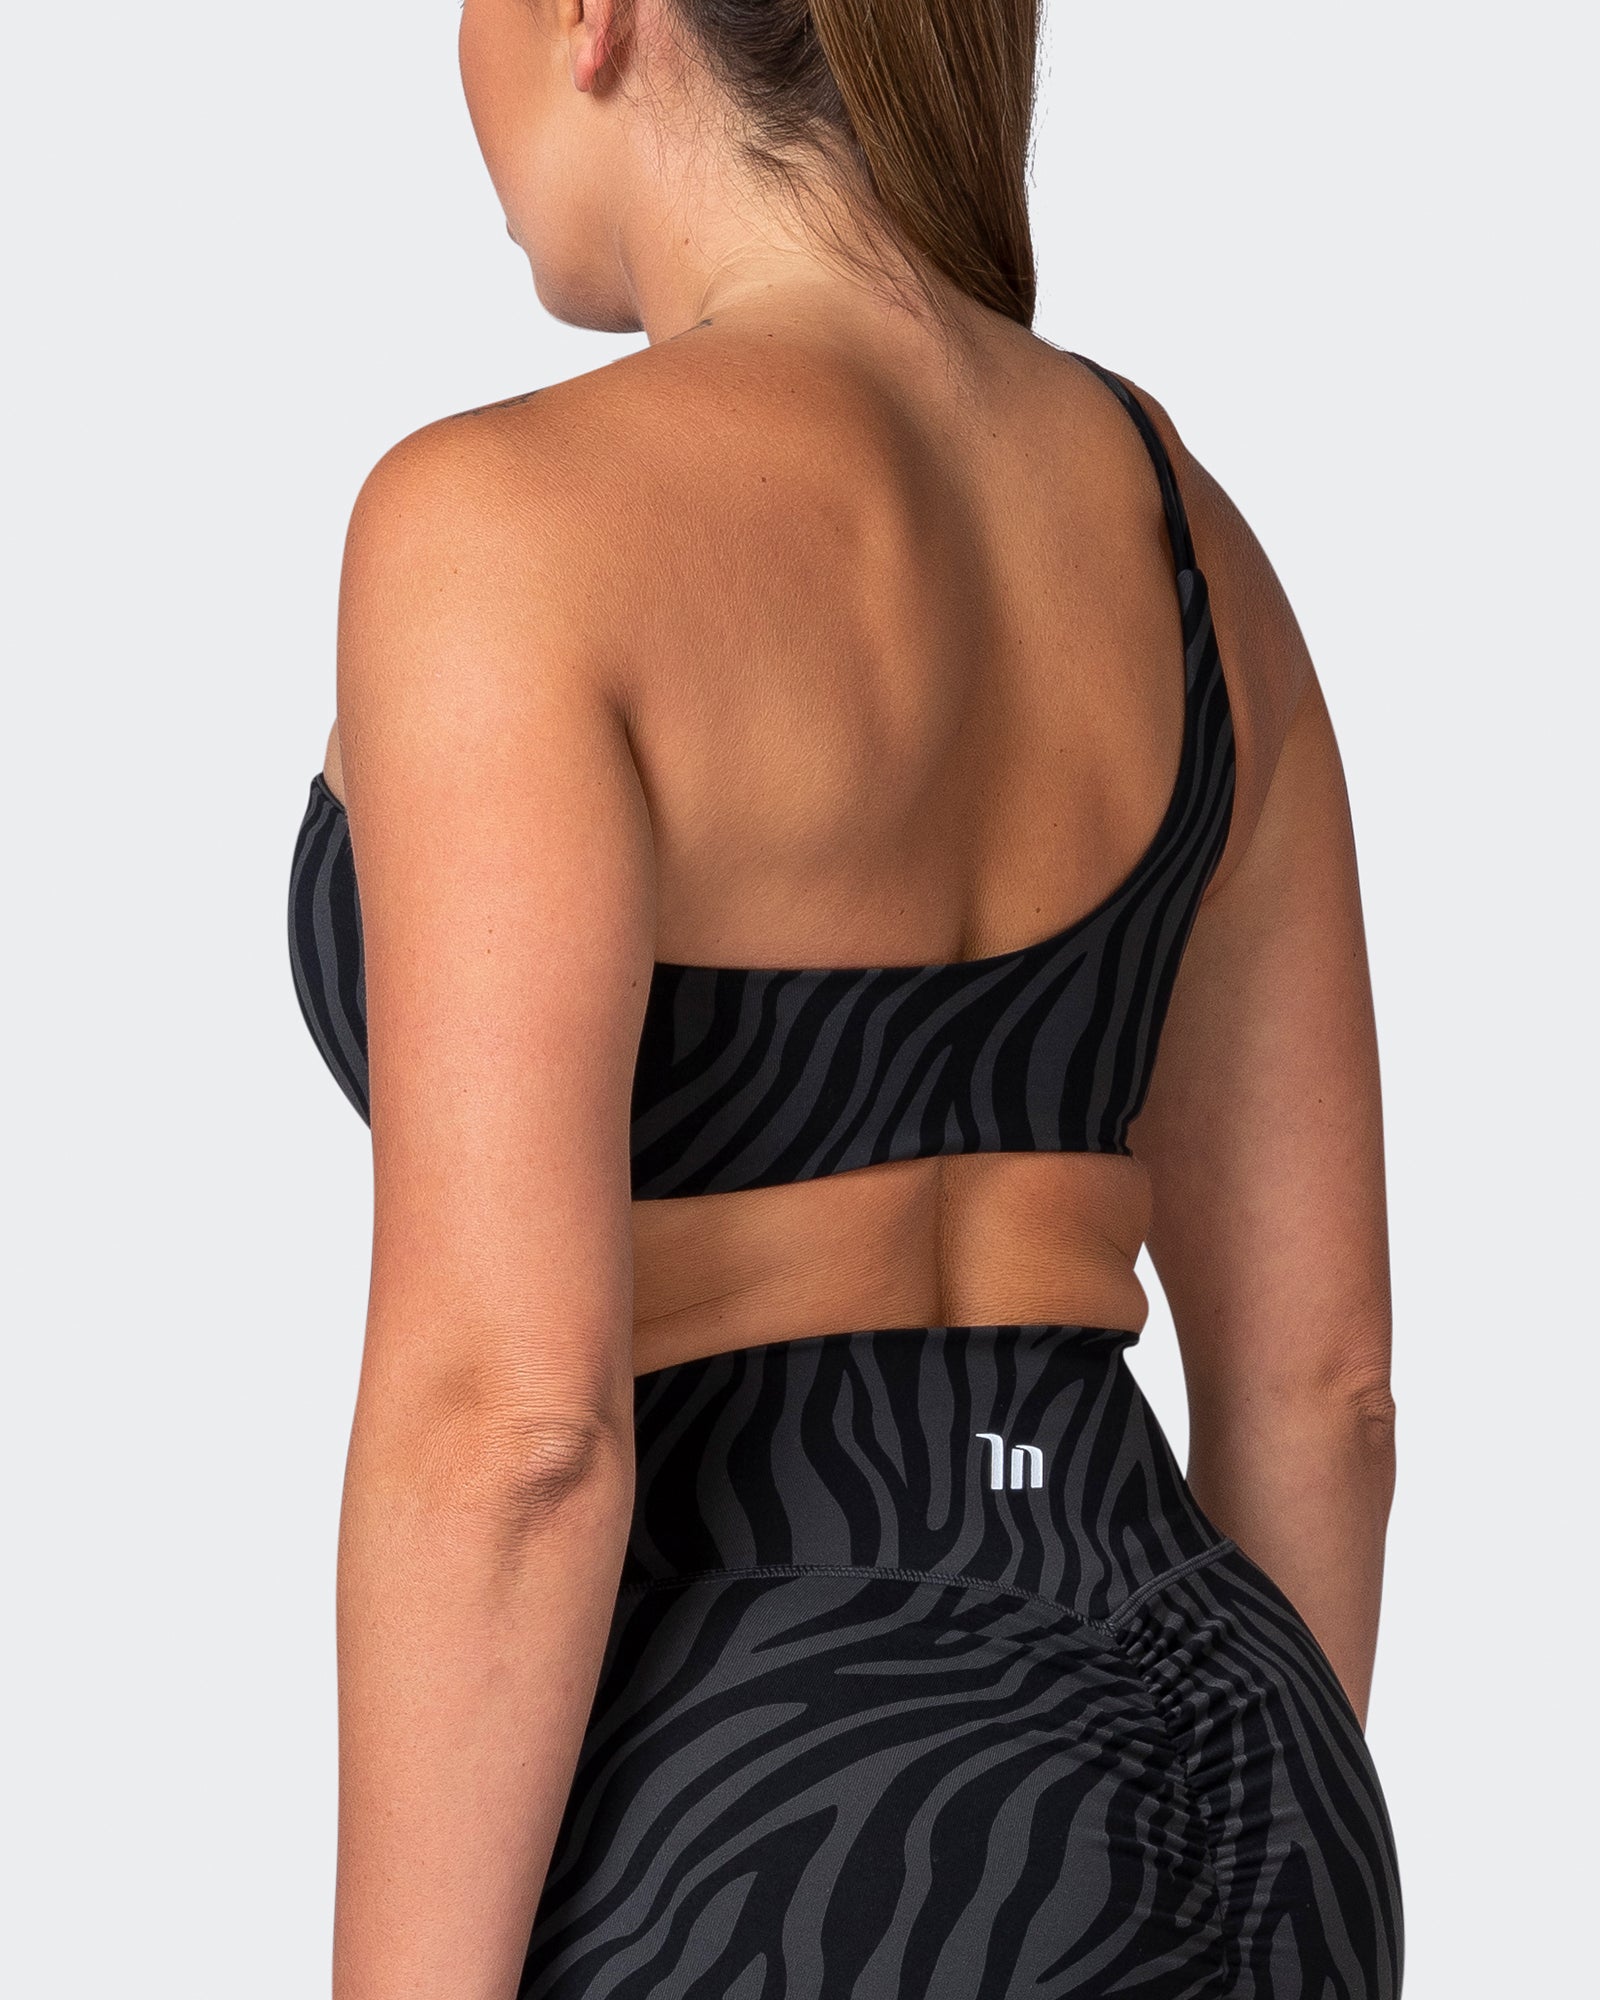 musclenation Sports Bras Movement One Shoulder Bralette - Monochrome Zebra Print